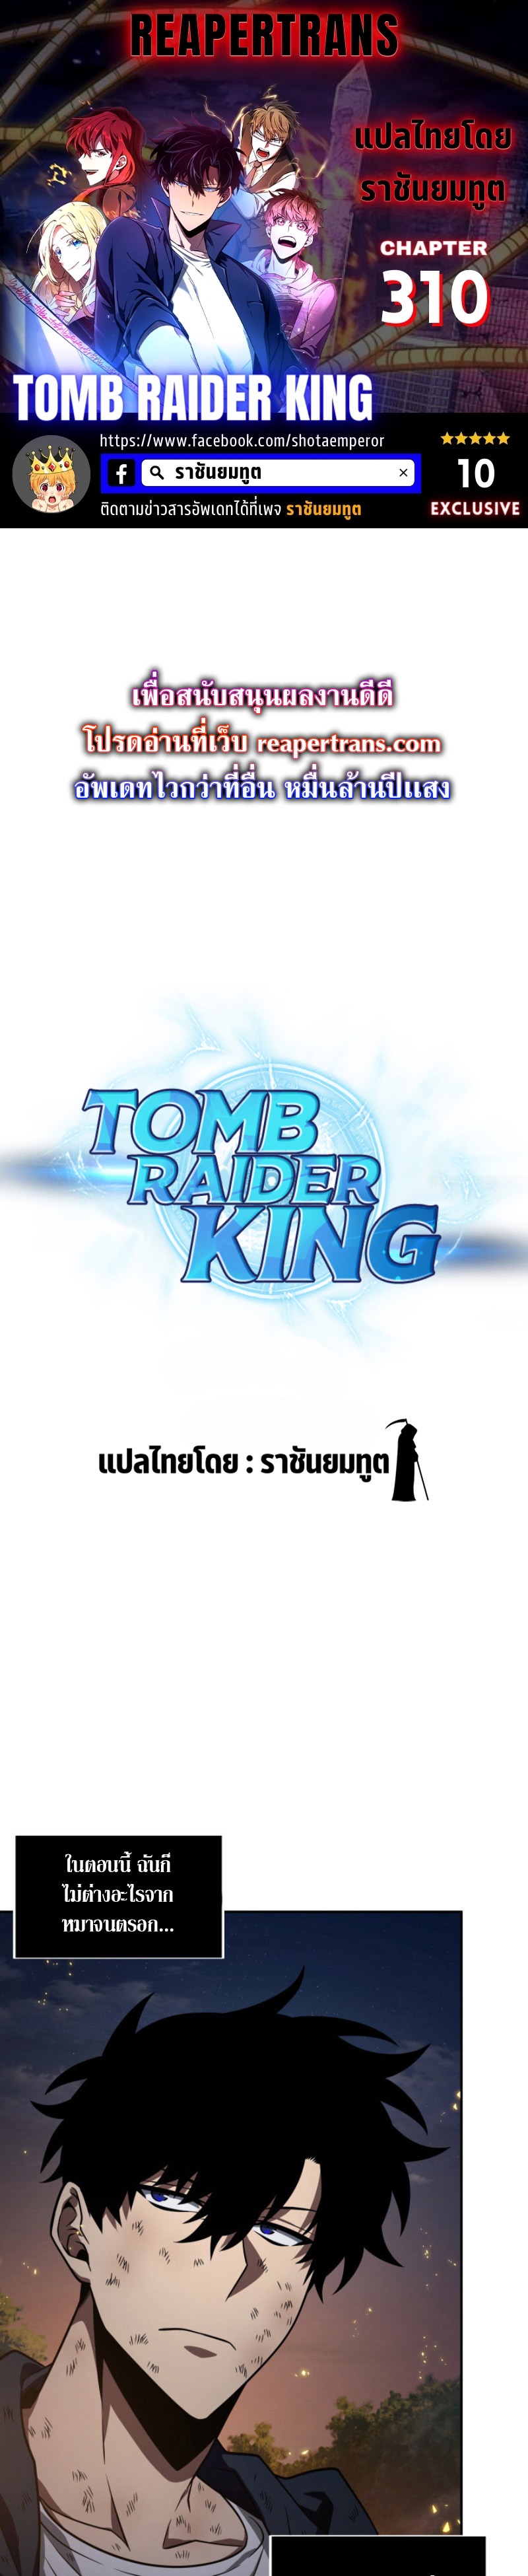 tomb raider king 310.01